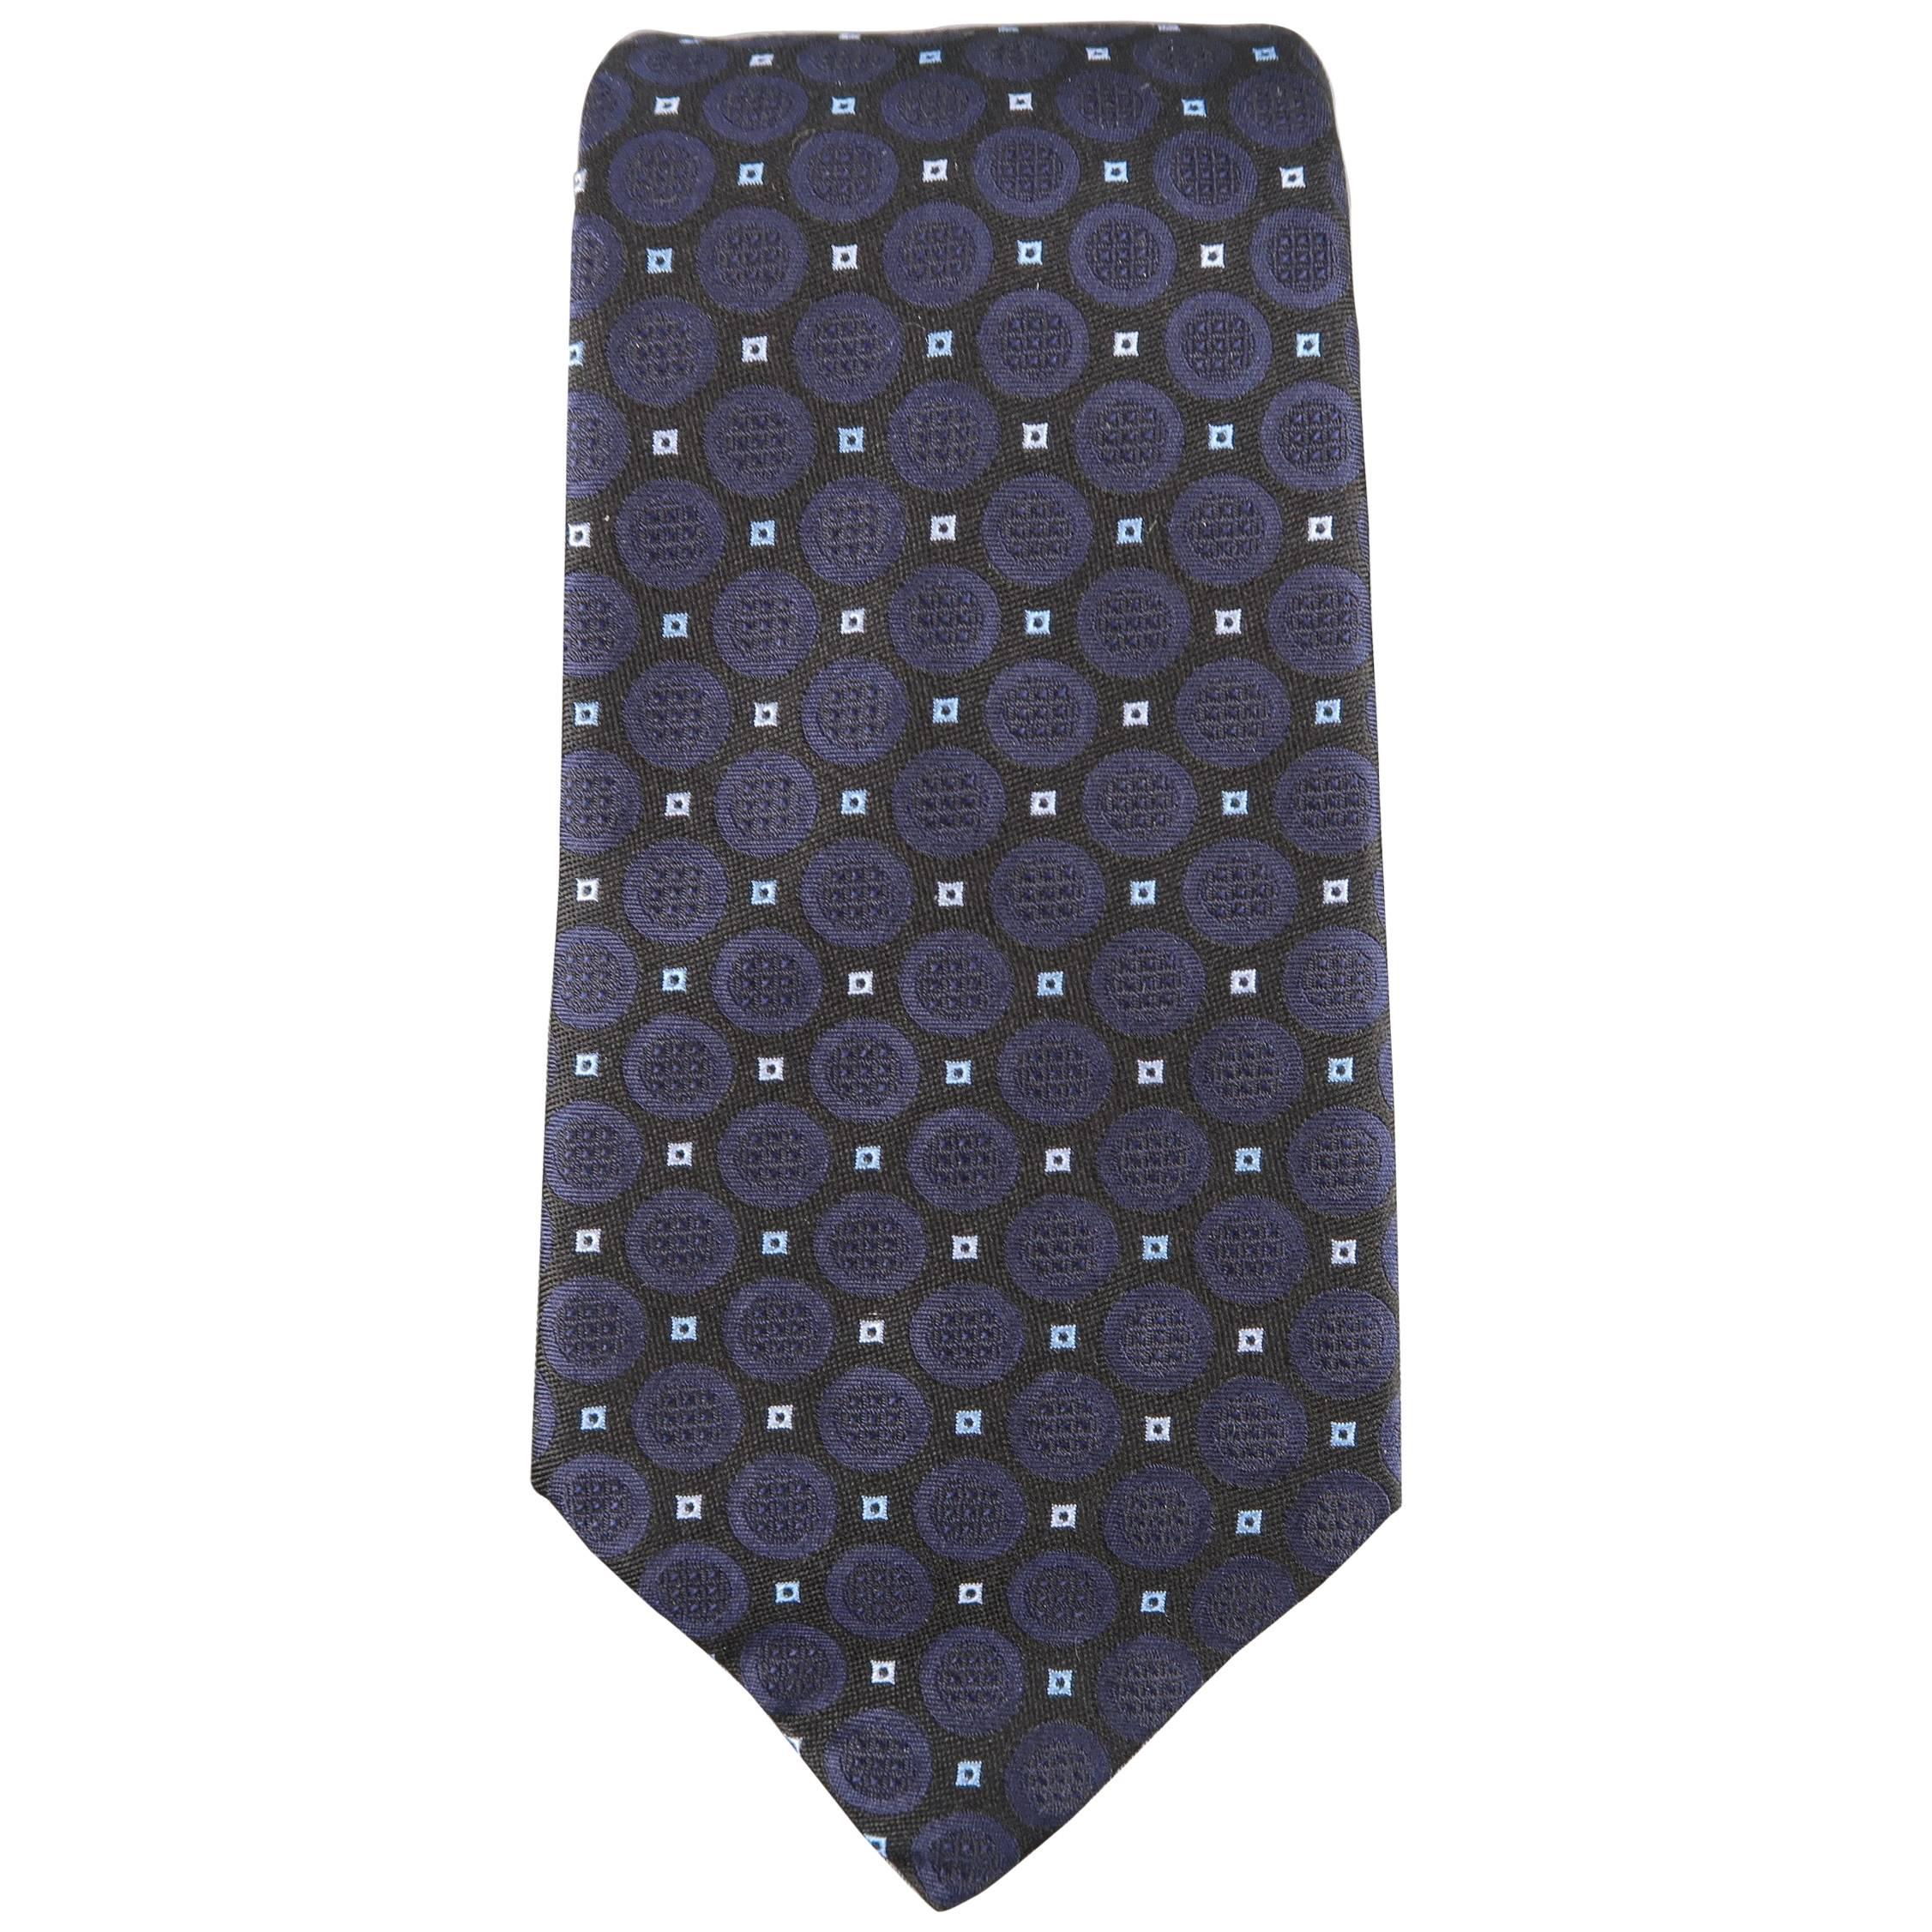 VERSACE Black & Navy Spot Pattern Silk Tie in Box